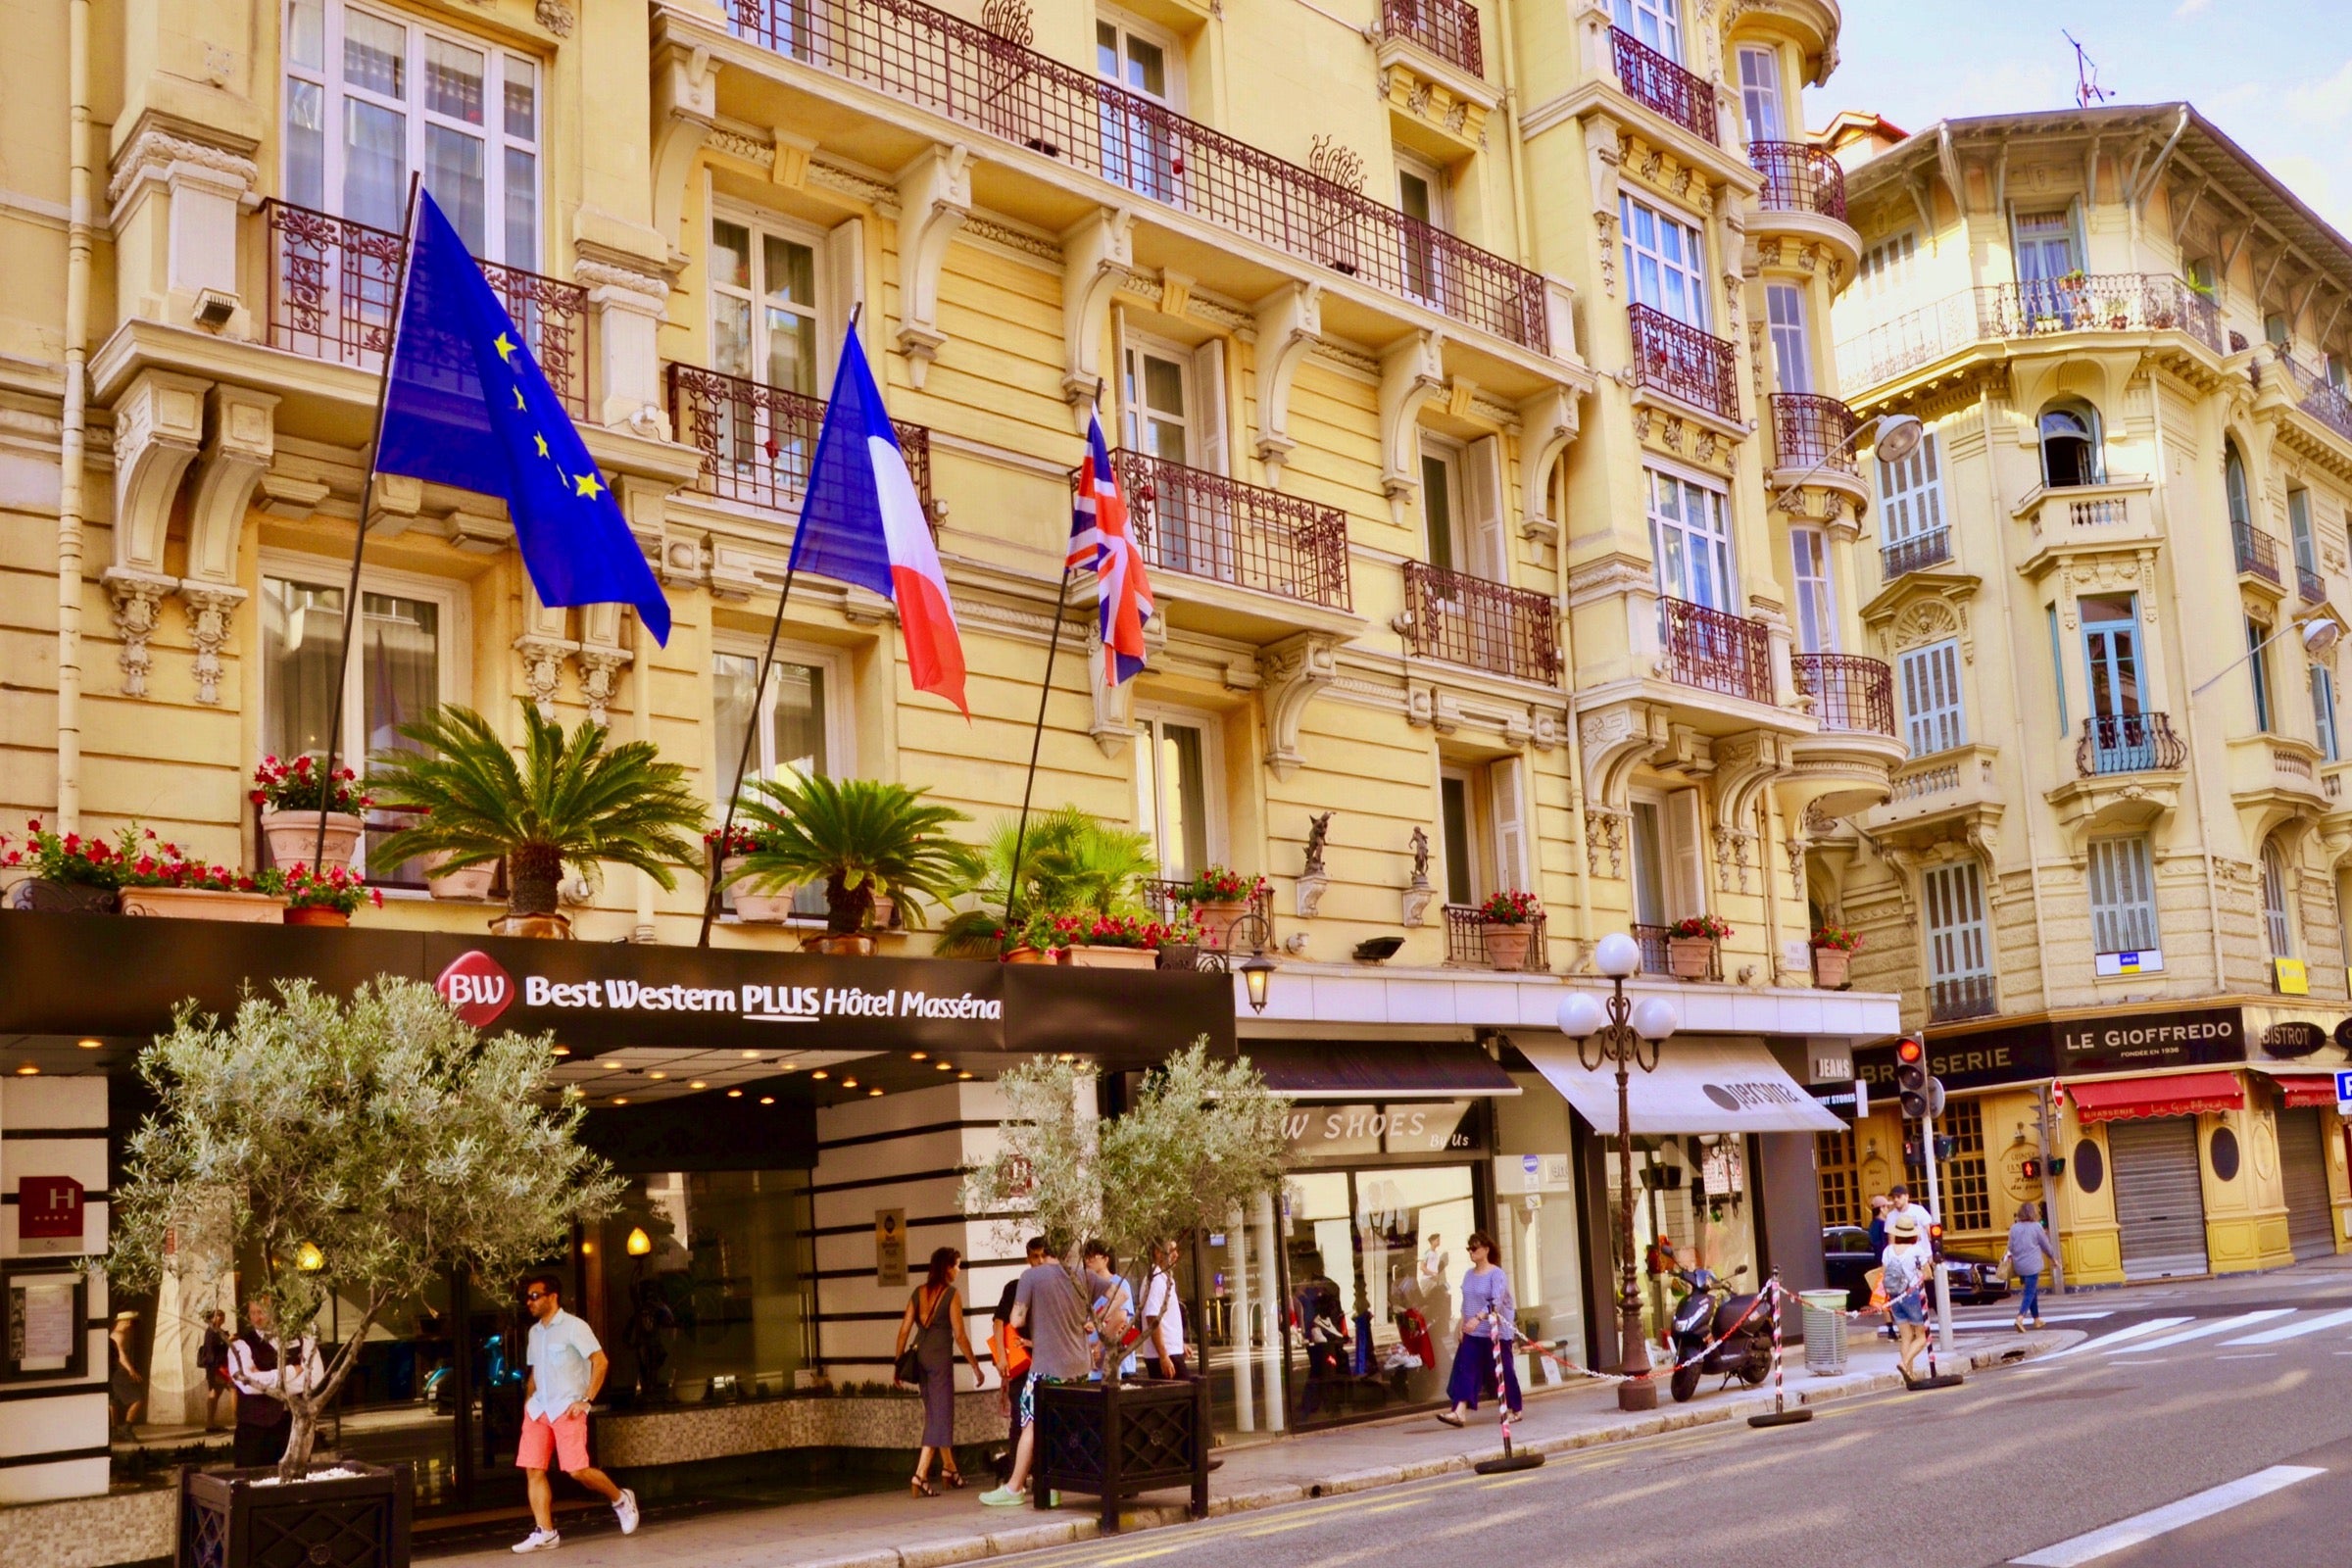 Best Western Plus in Nice, France